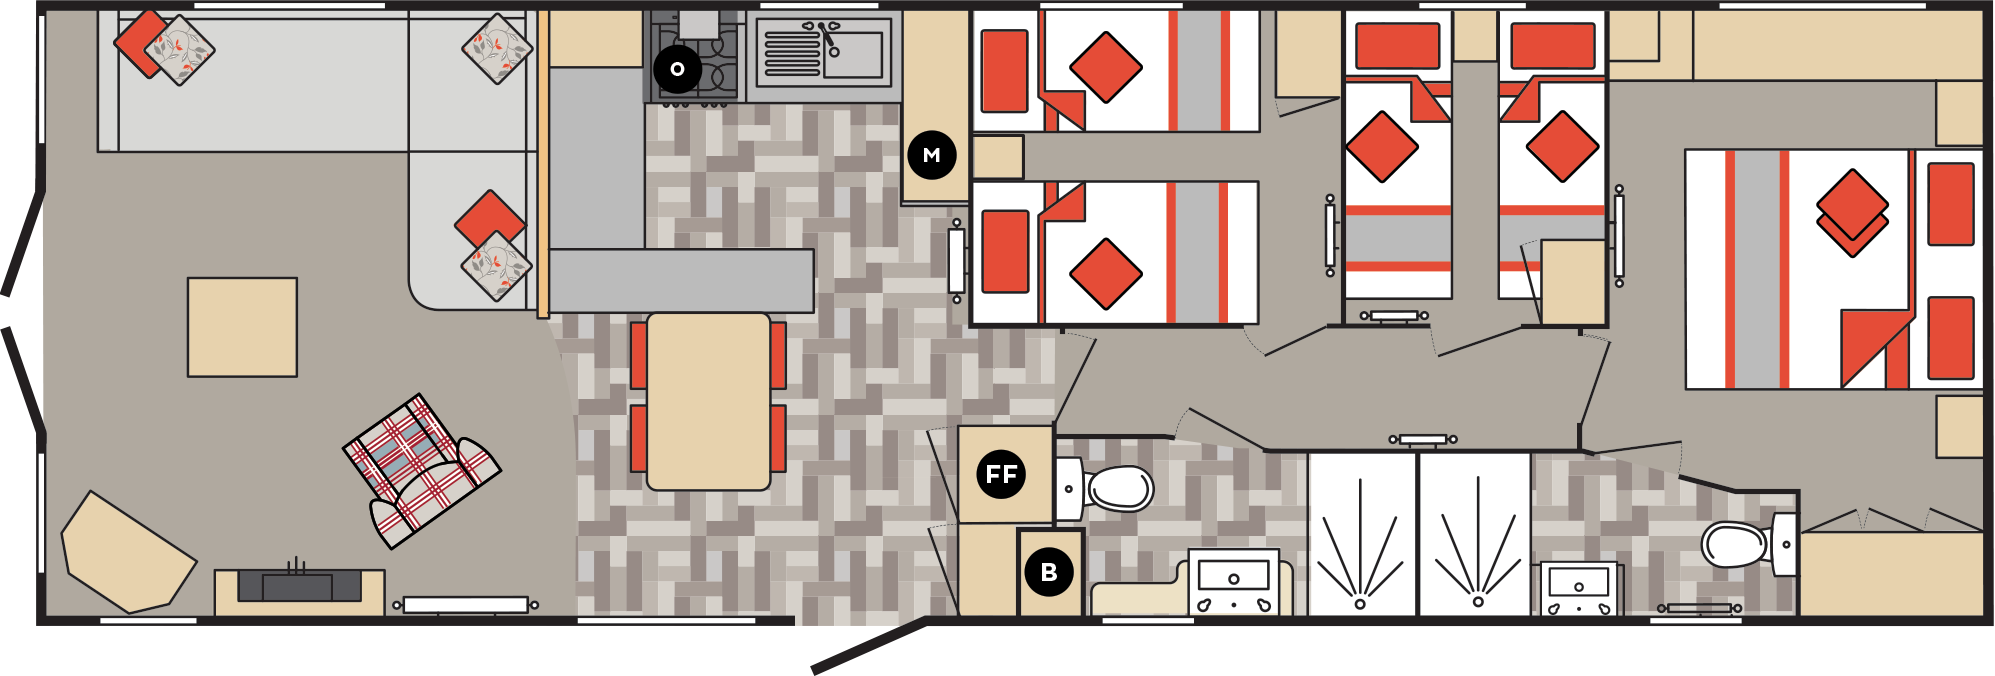 New Carnaby Glenmoor Lodge 41x13 floorplan layout static caravan mobile home